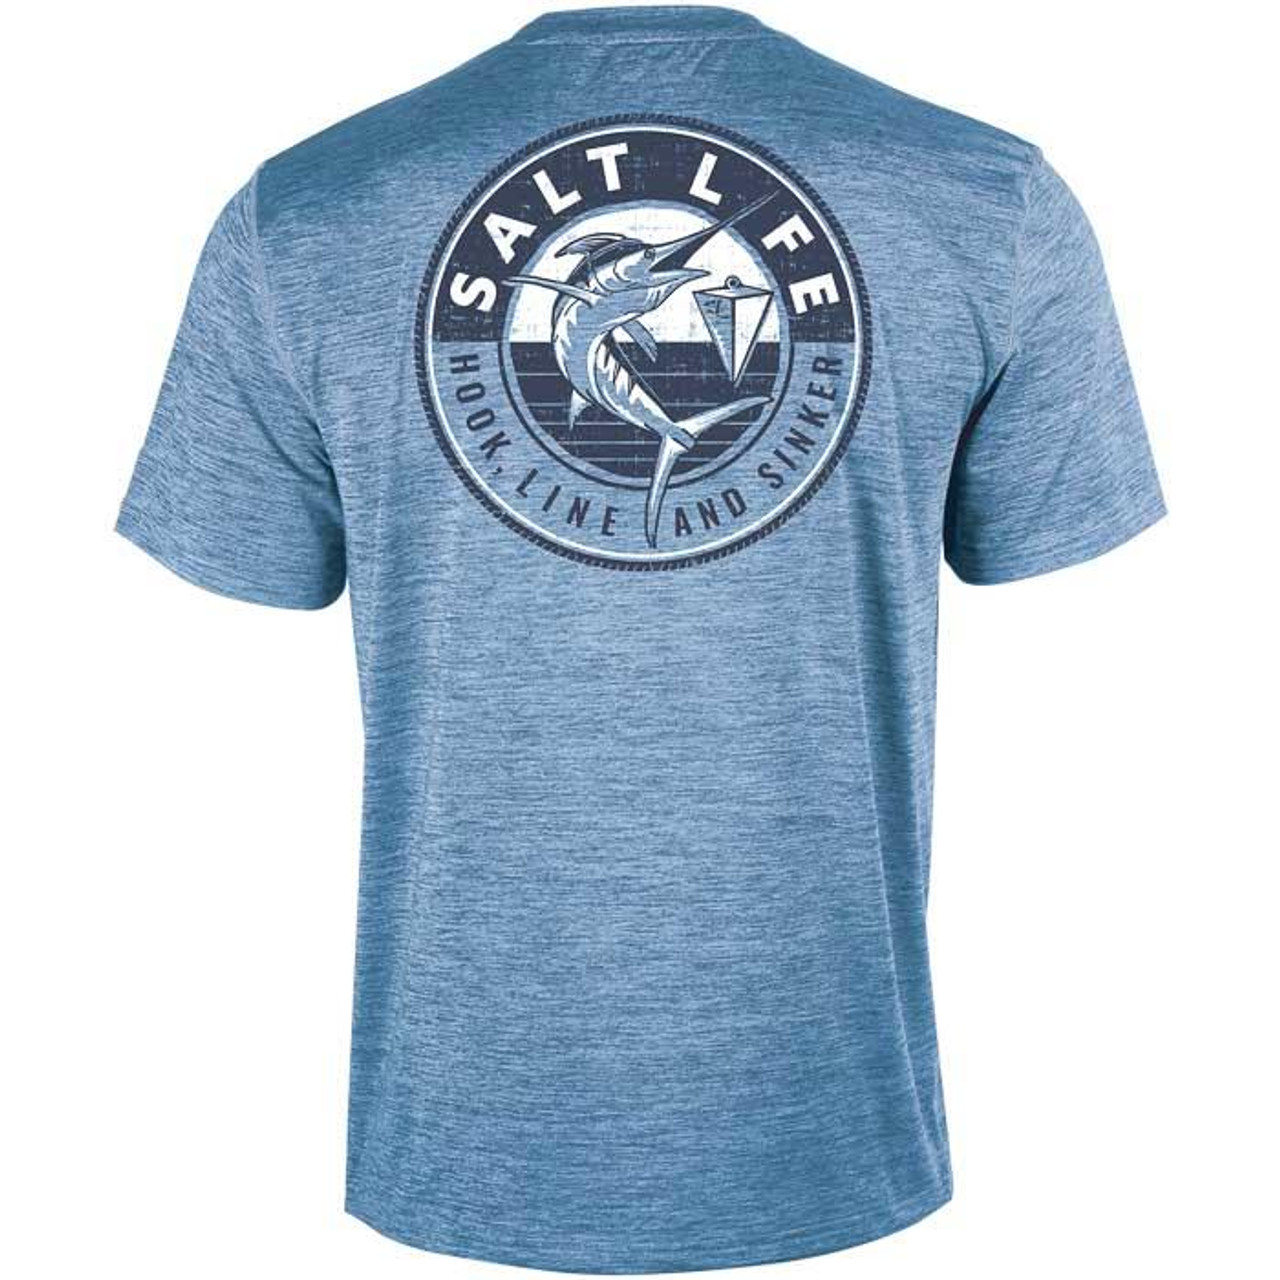 Salt Life Tank Top Shirt Men's XL Blue Beeracuda Ale Sleeveless Fishing  Shirt